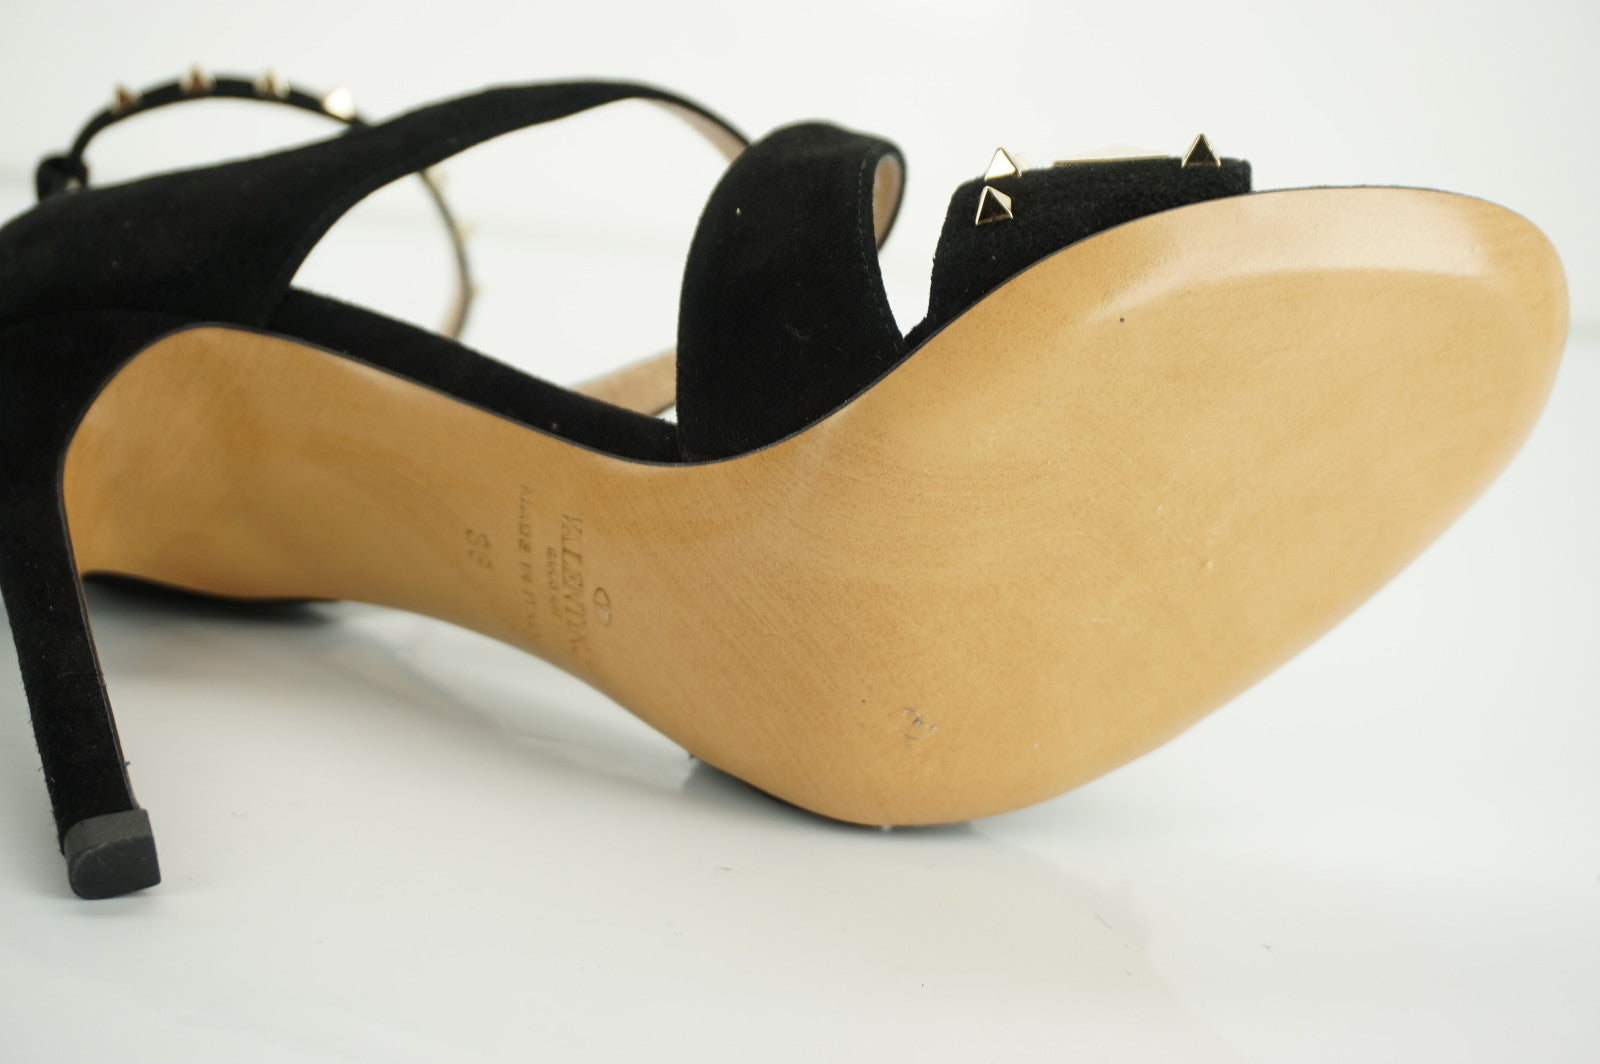 Valentino Rockstud Cross Strap Black Suede Sandals SZ 36 NIB Heel $1085